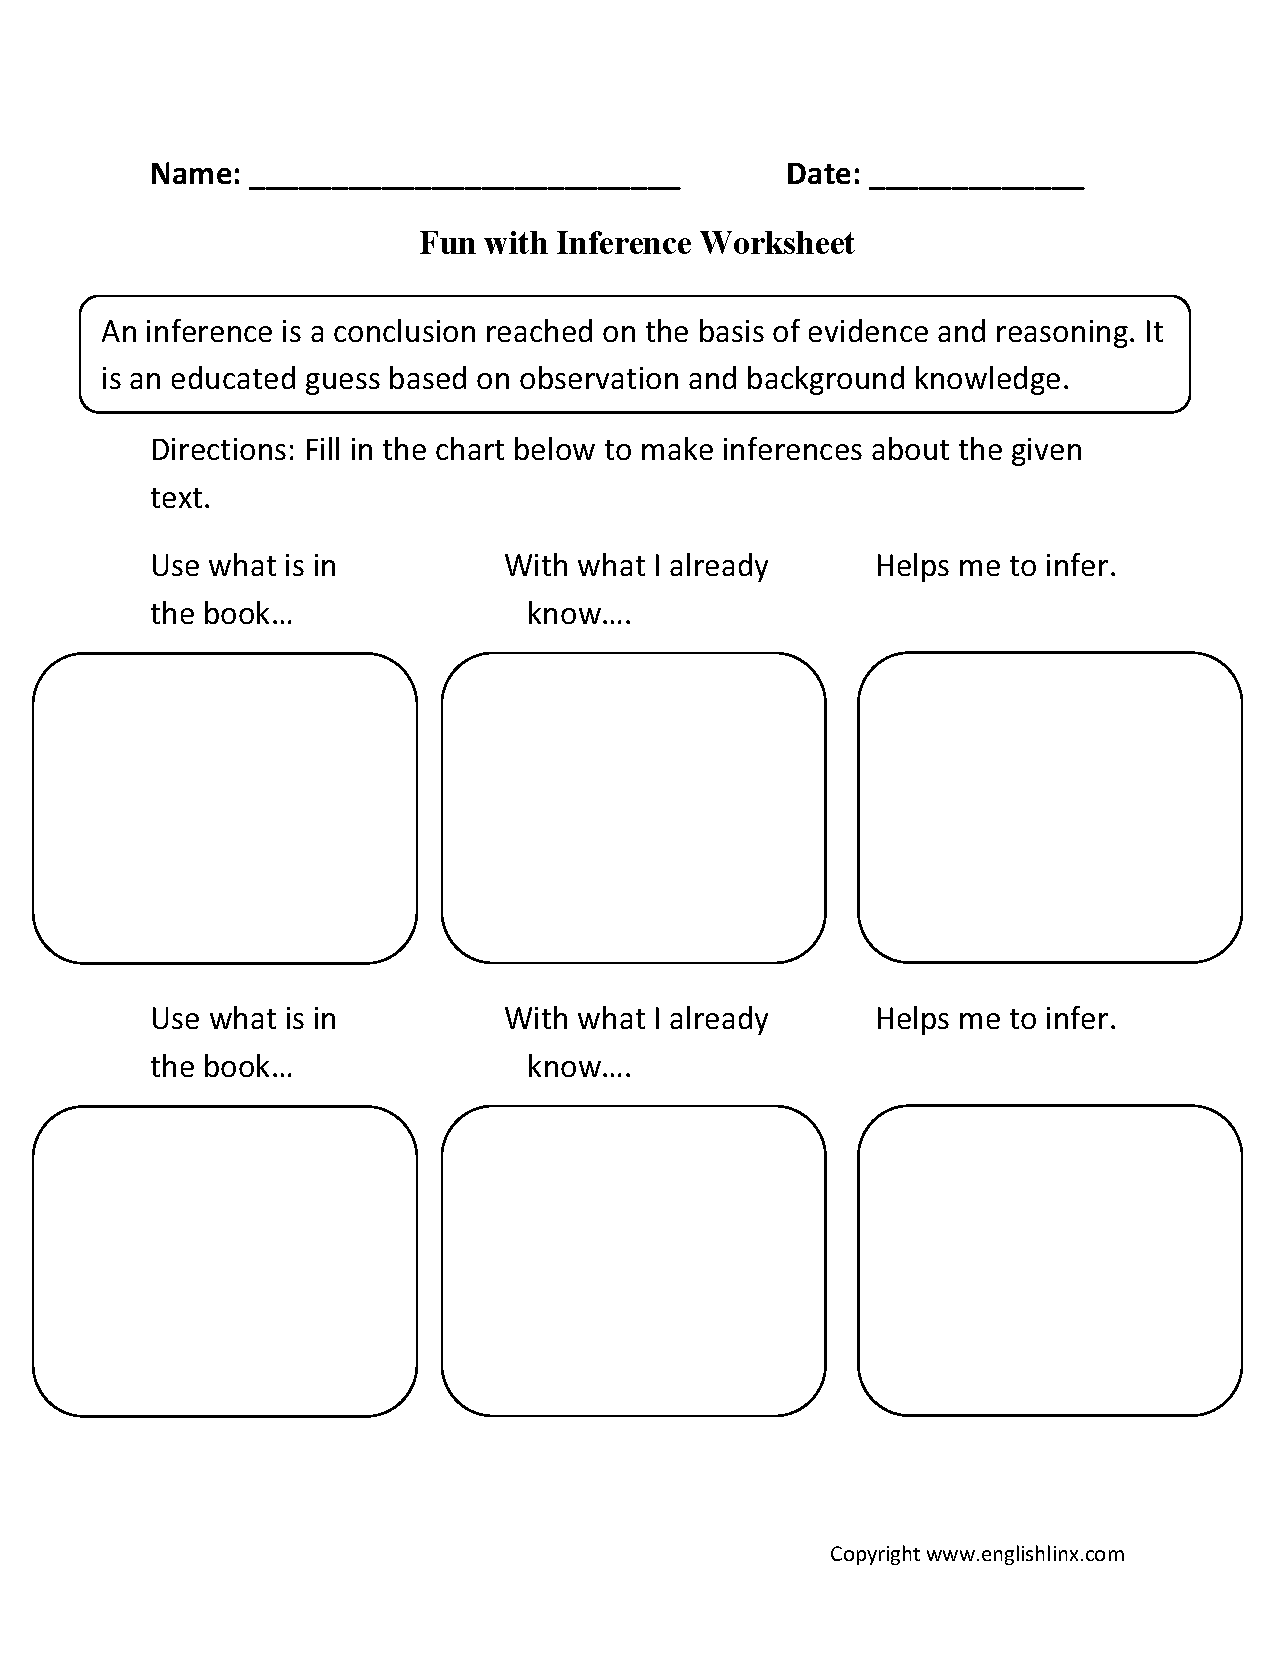 reading-inference-worksheet